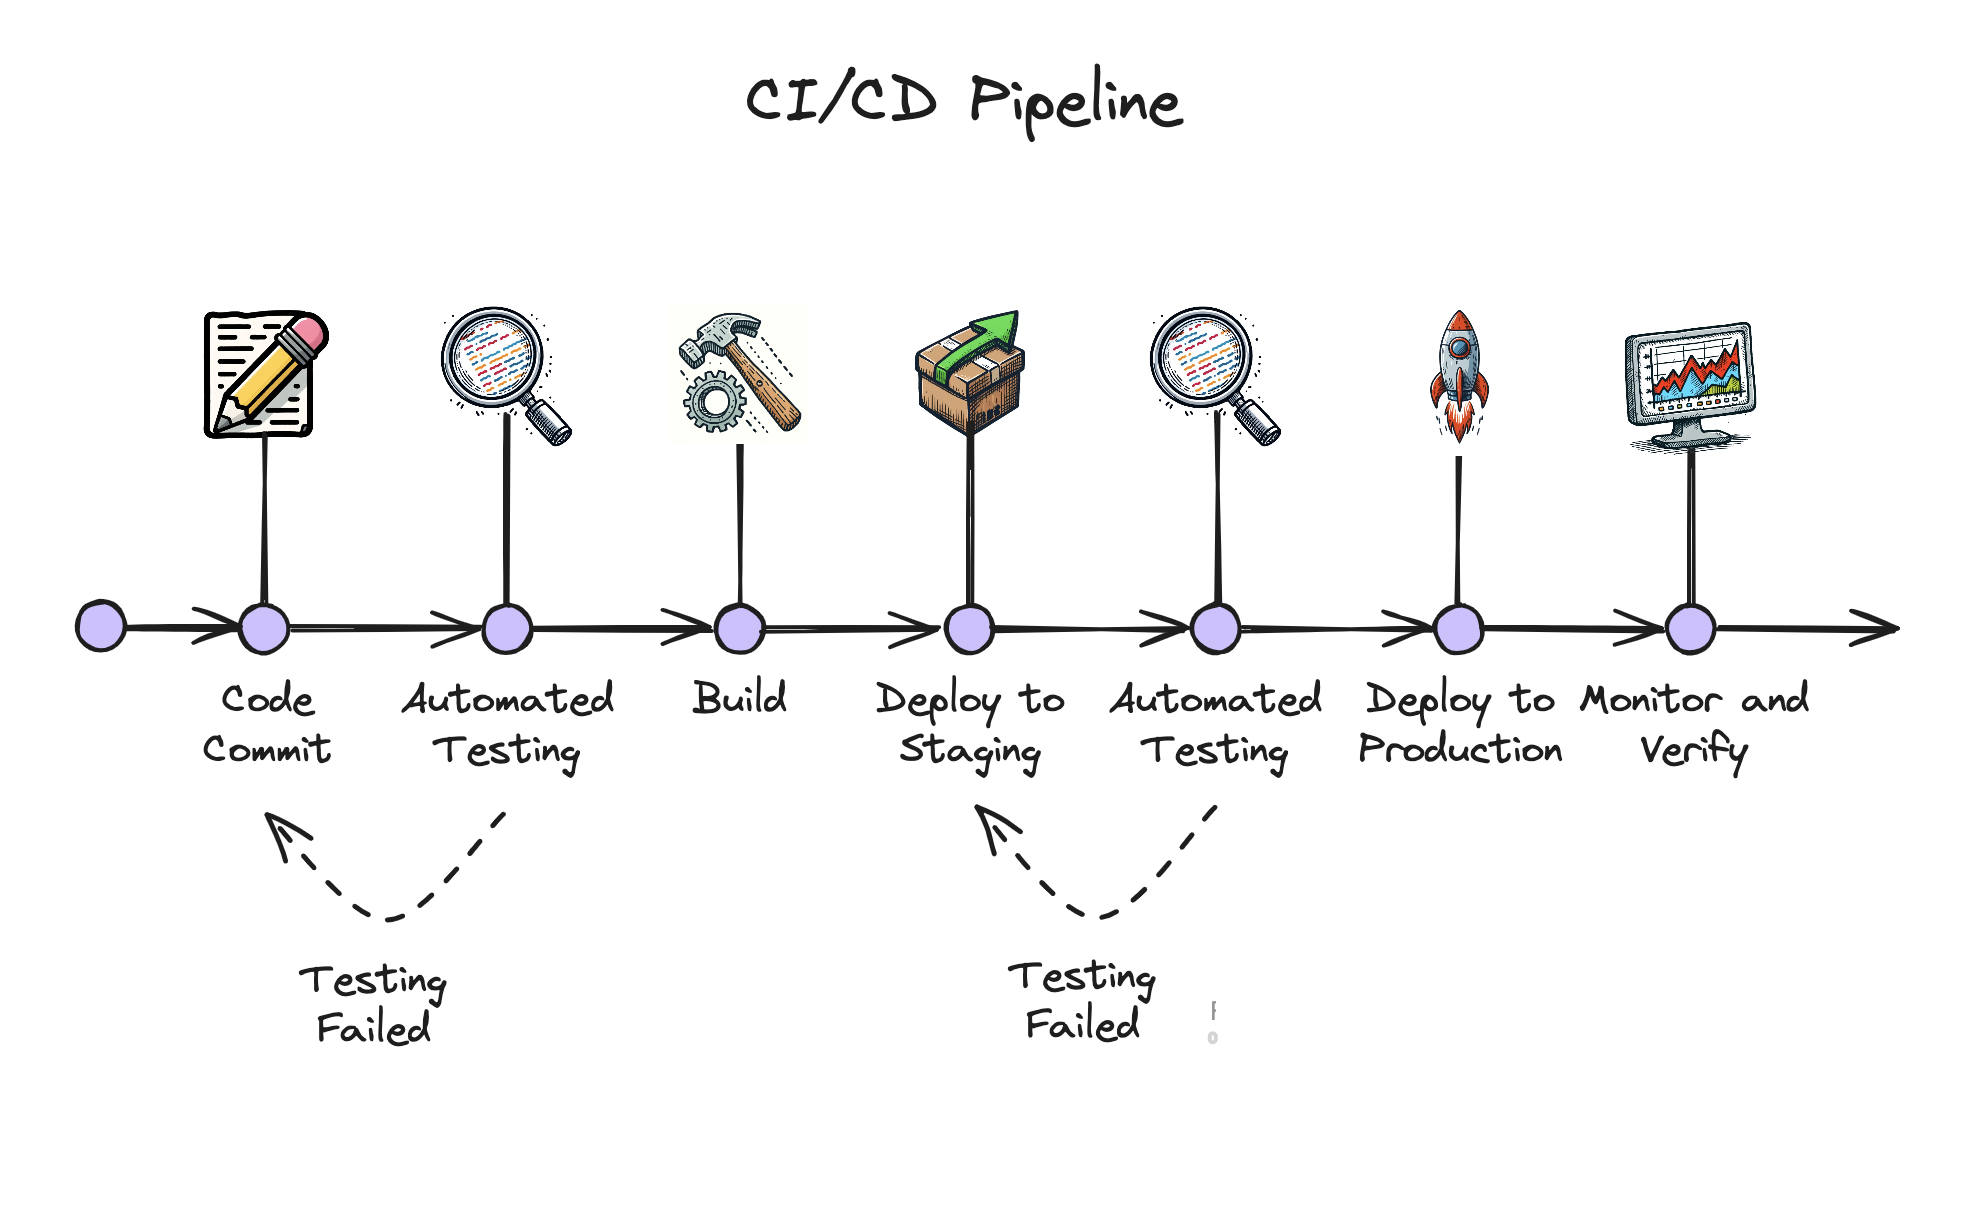 CI-CD-Pipeline